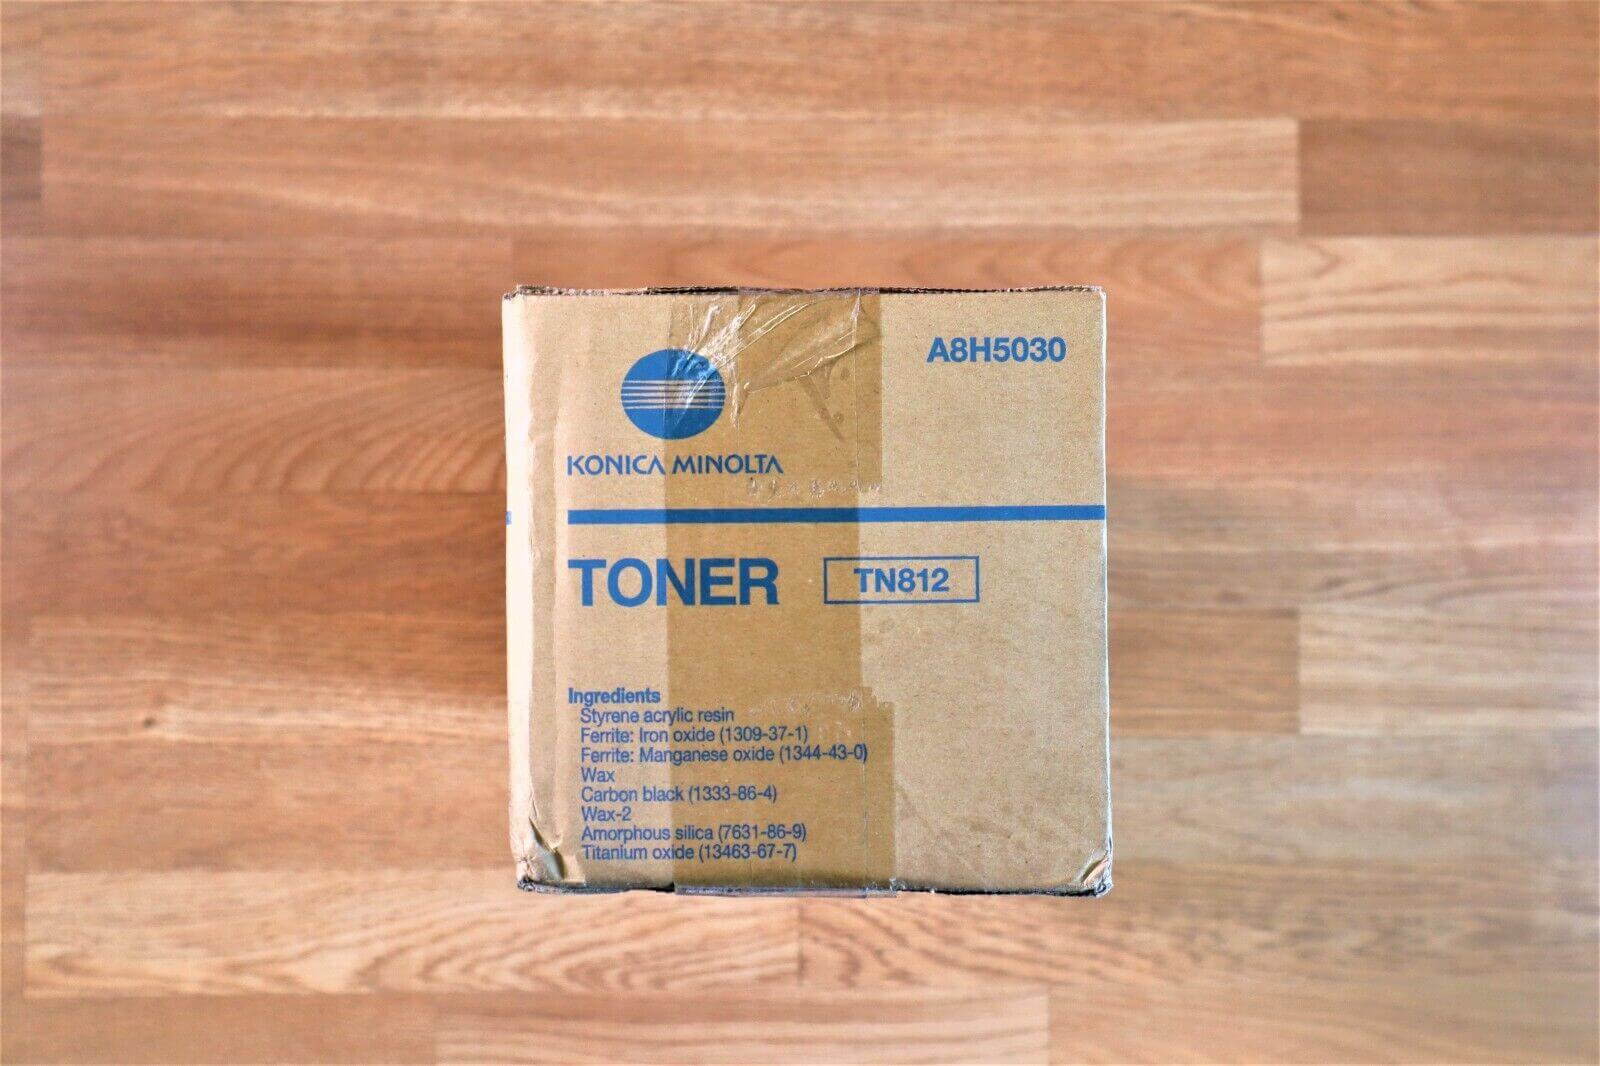 Genuine Konica Minolta TN812 Toner A8H5030 For Bizhub 808 Same Day Shipping!!! - copier-clearance-center